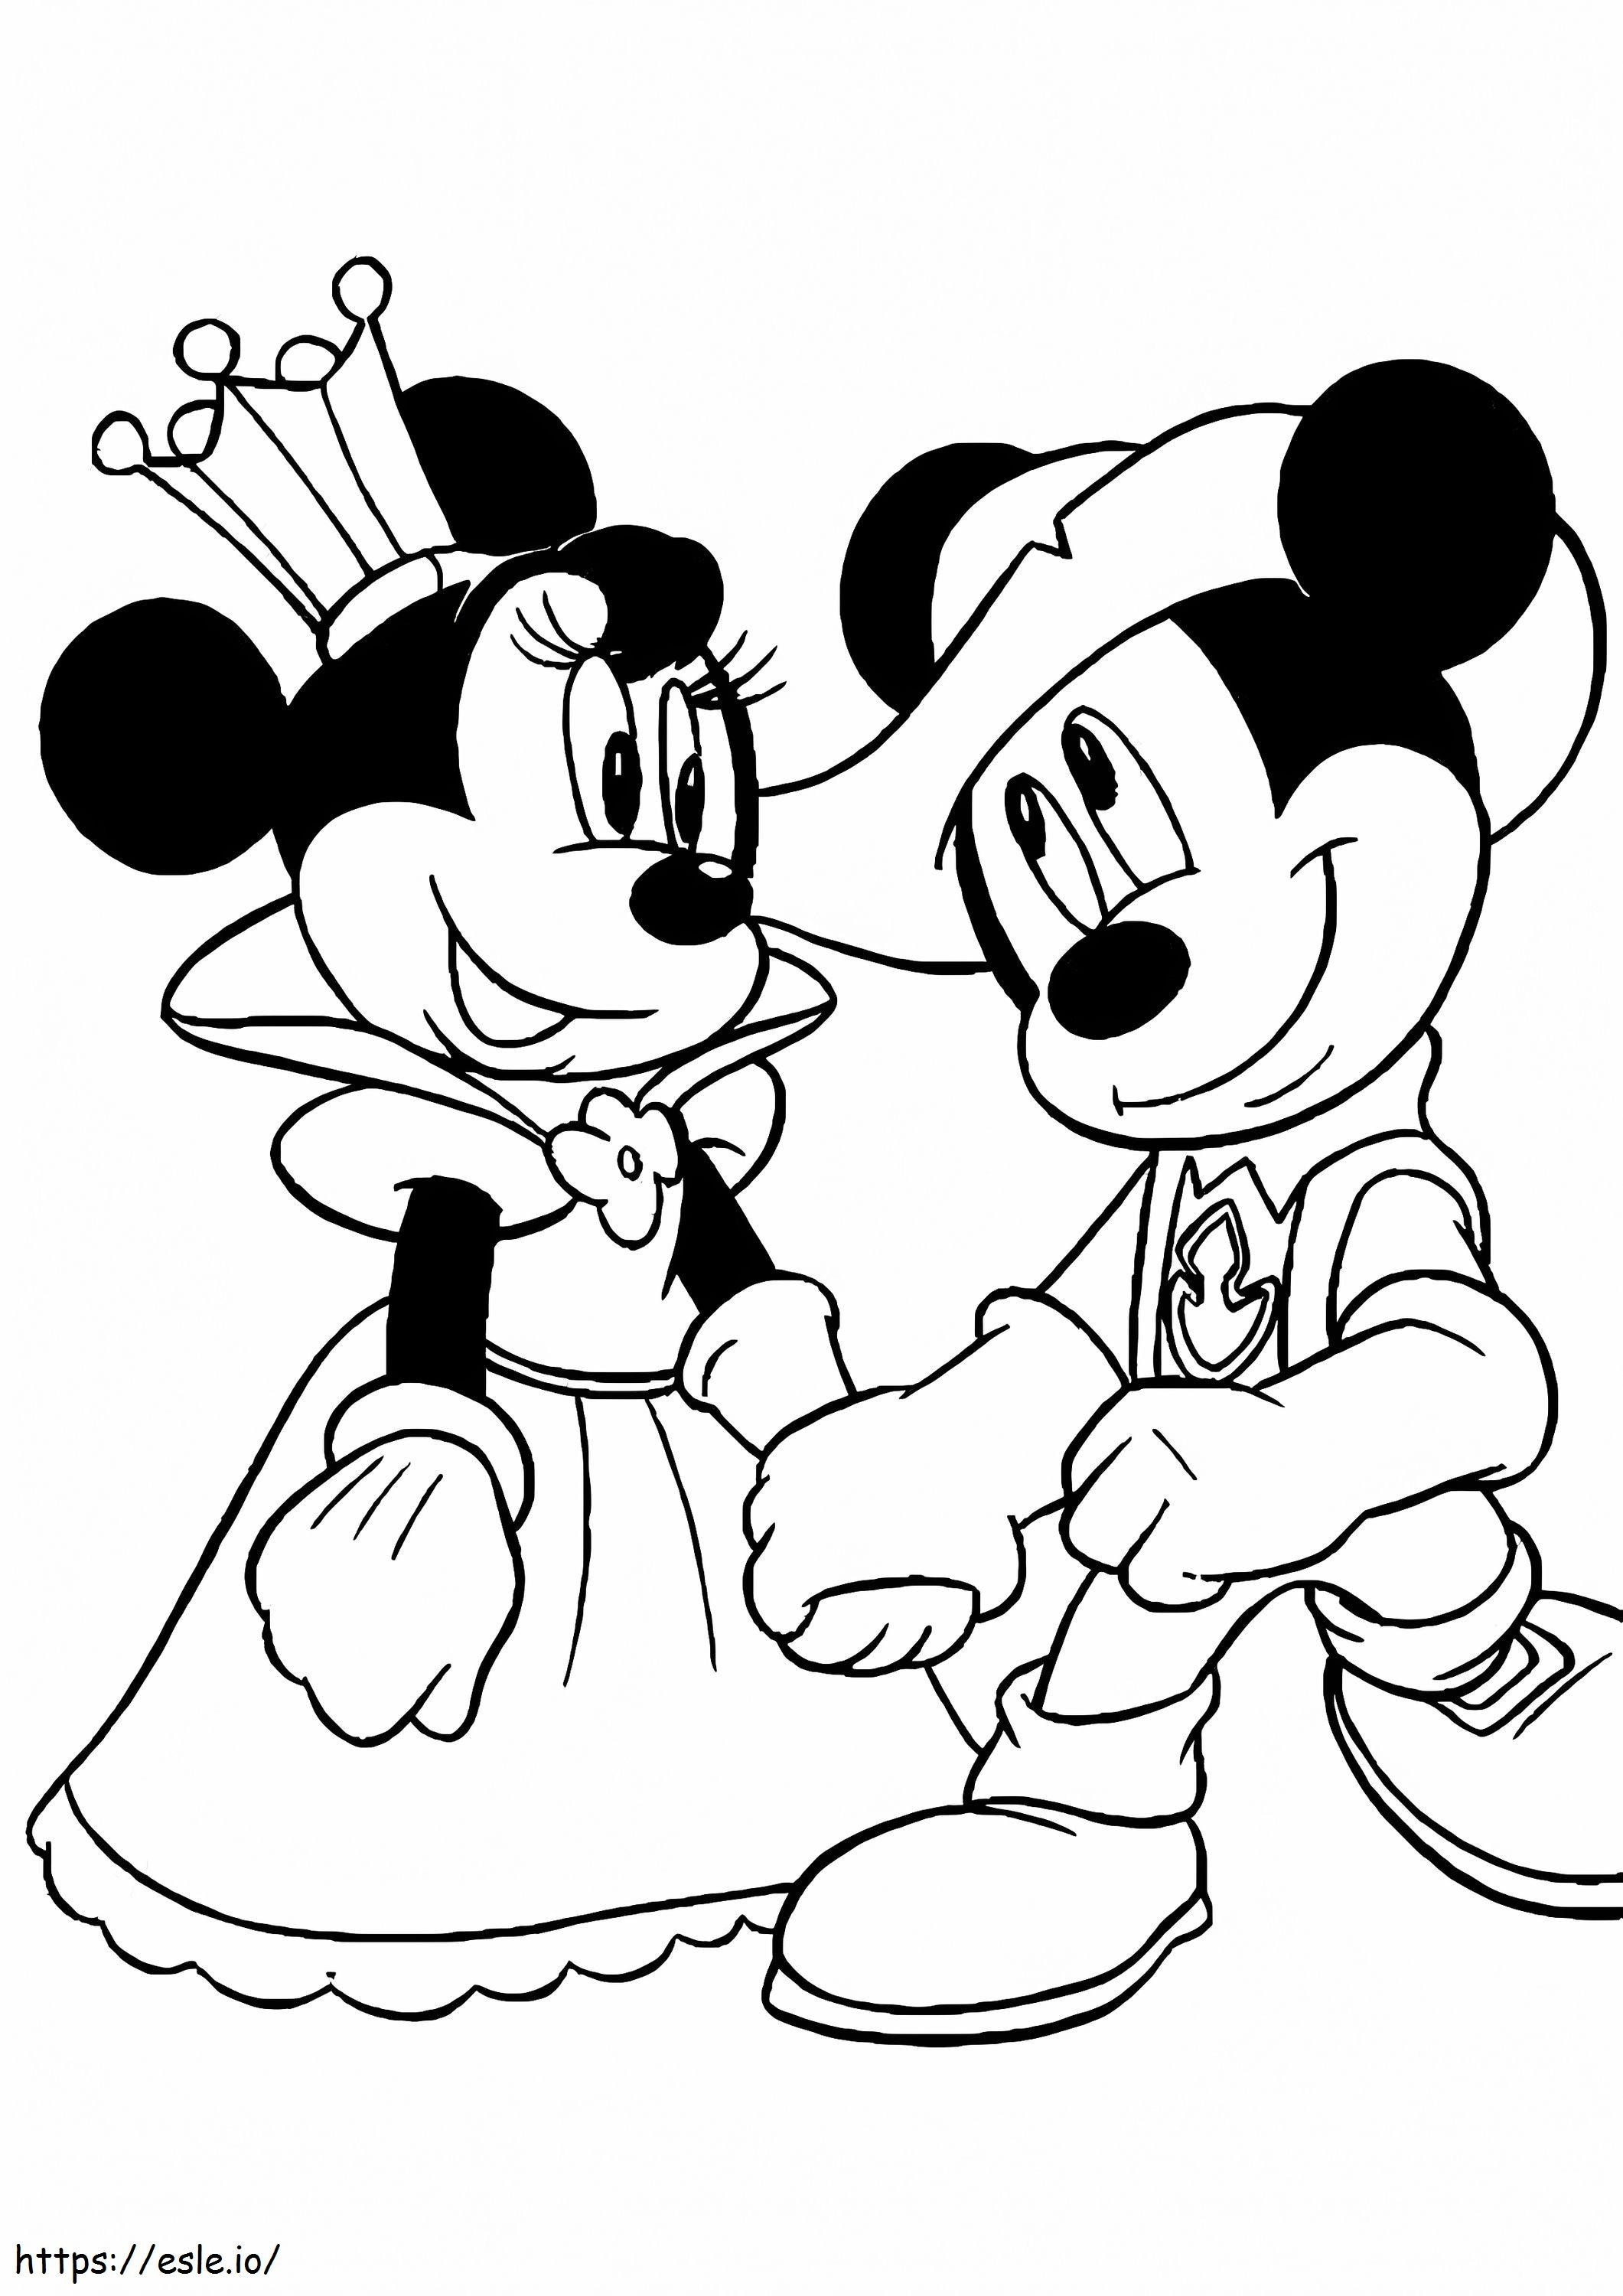 Rainha Minnie Mouse e Cavaleiro Mickey Mouse para colorir